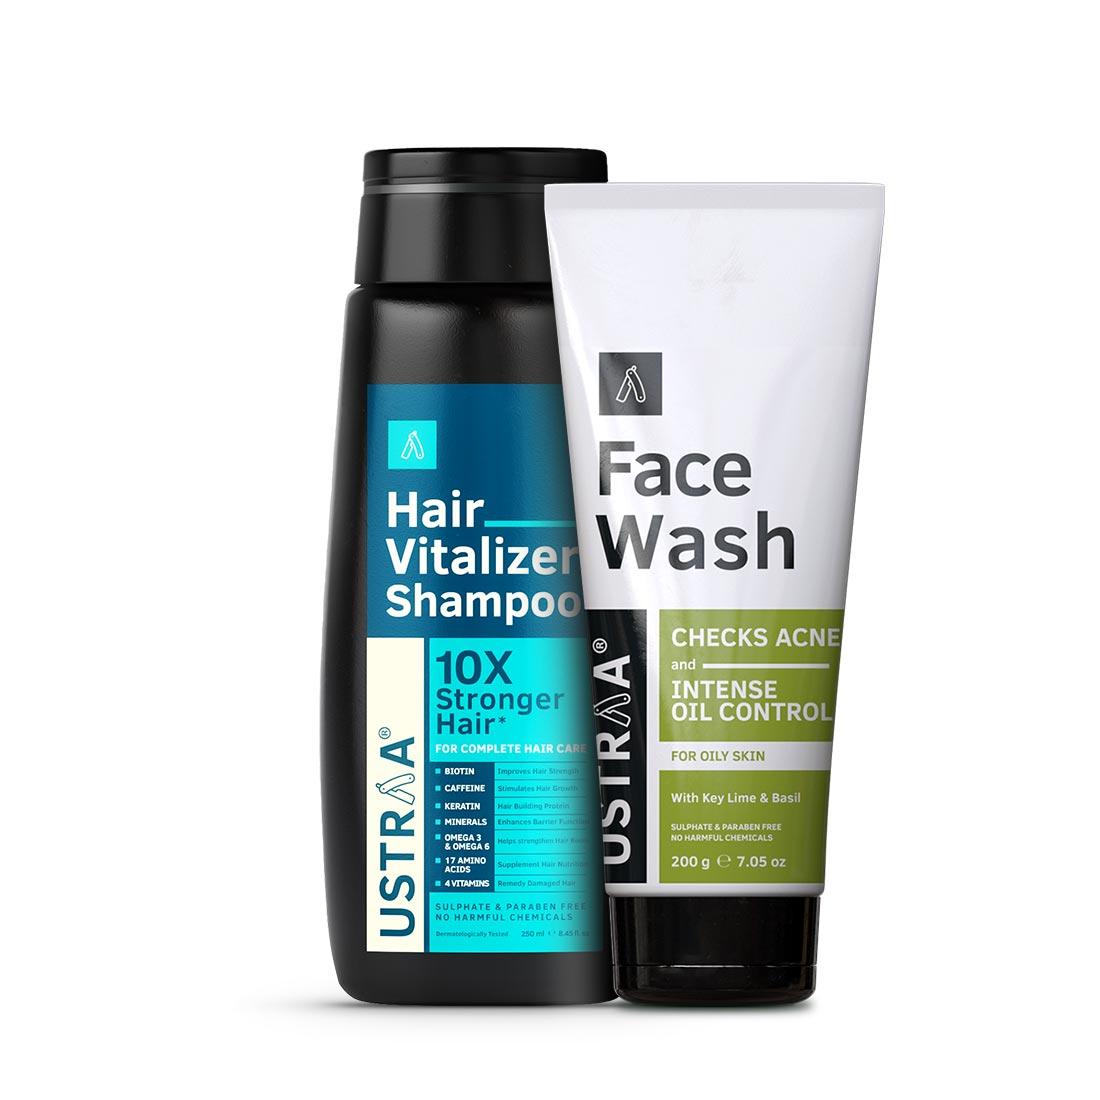 Hair Vitalizer Shampoo & Face Wash Oily Skin